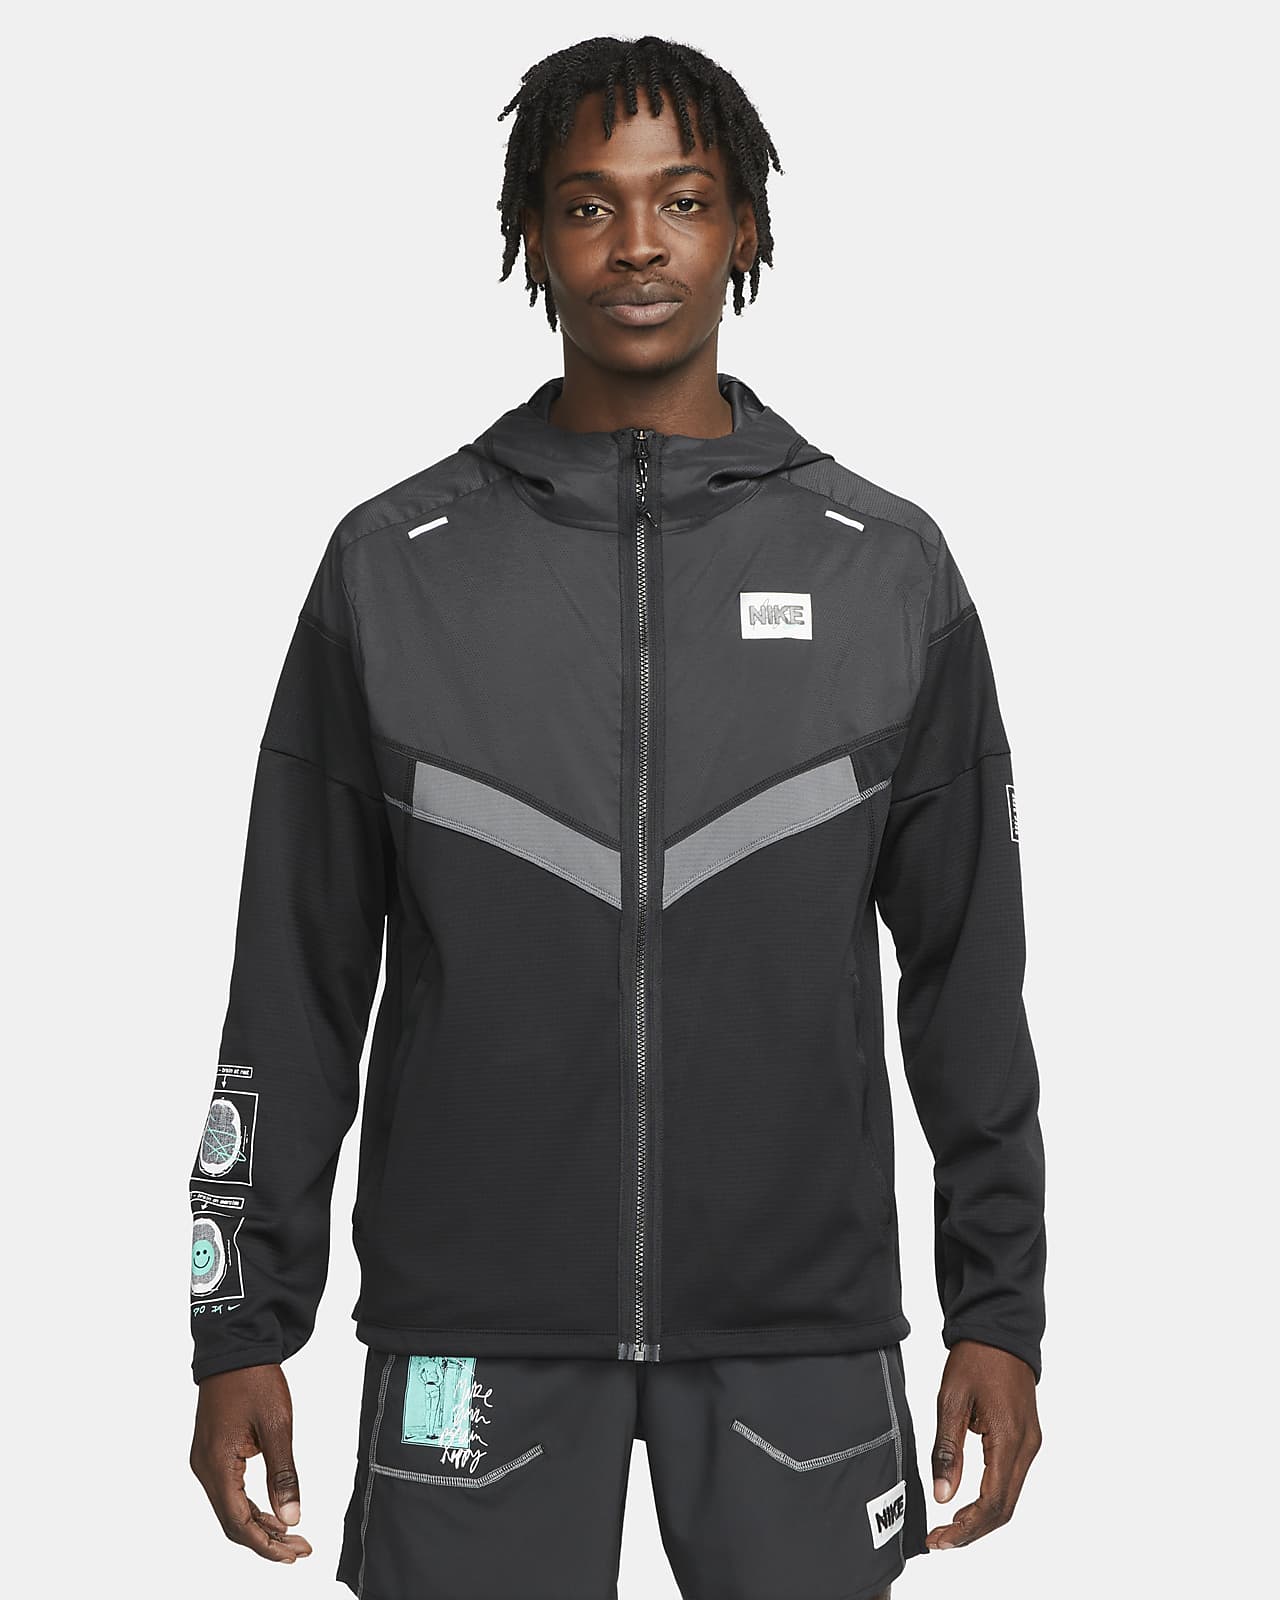 heilig ventilator puzzel Nike Windrunner D.Y.E. Men's Running Jacket. Nike.com